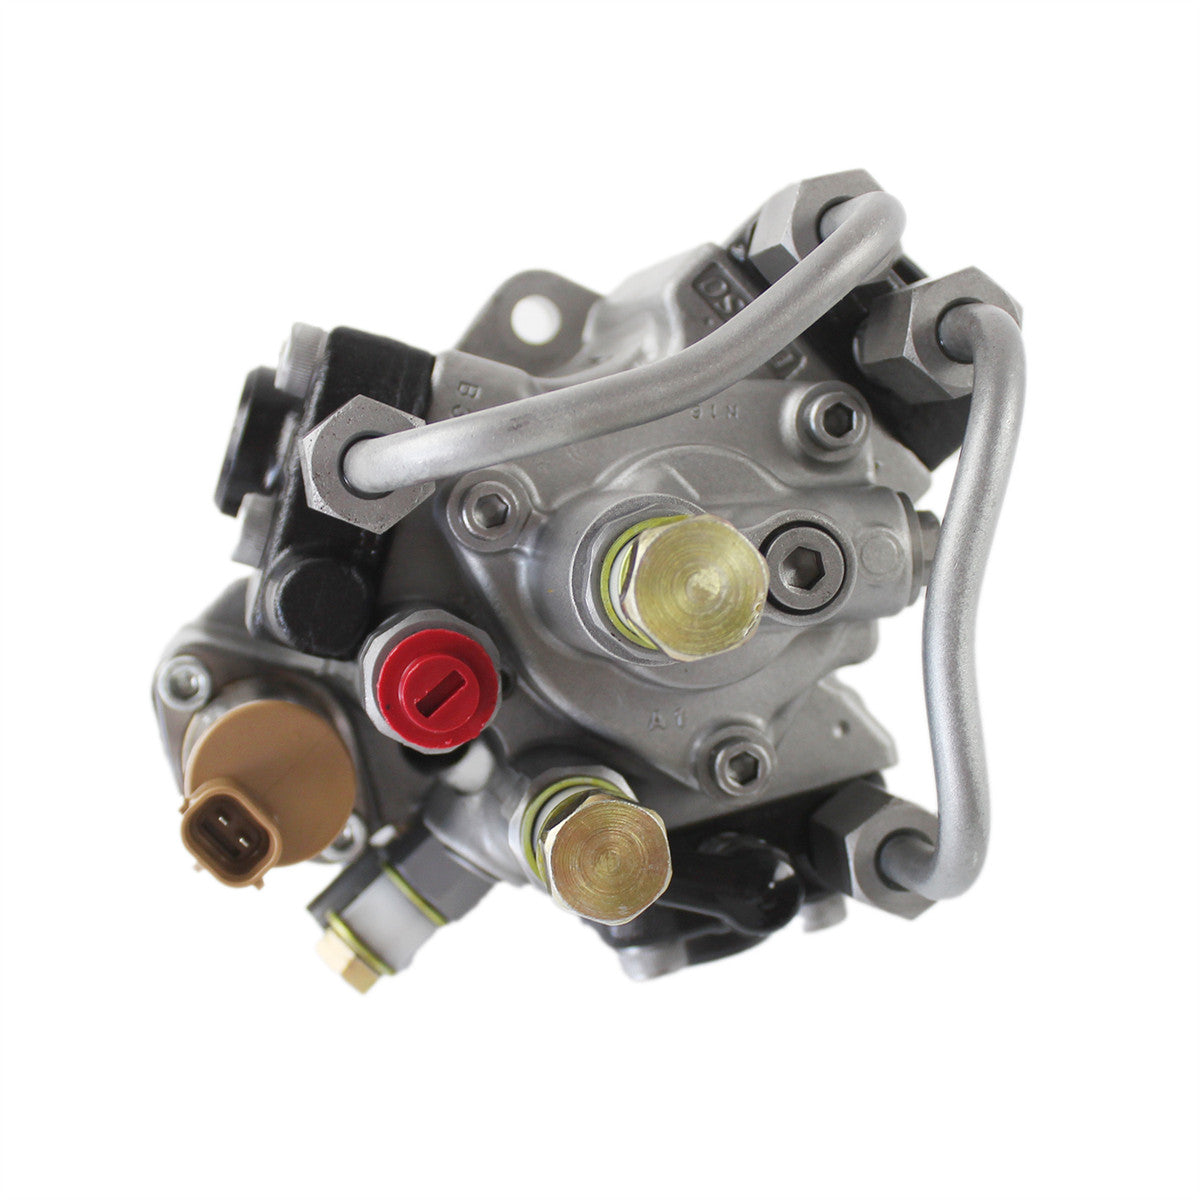 294050-0460 ME306611 Fuel Injection Pump for Mitsubishi 6M60T Engine - Sinocmp